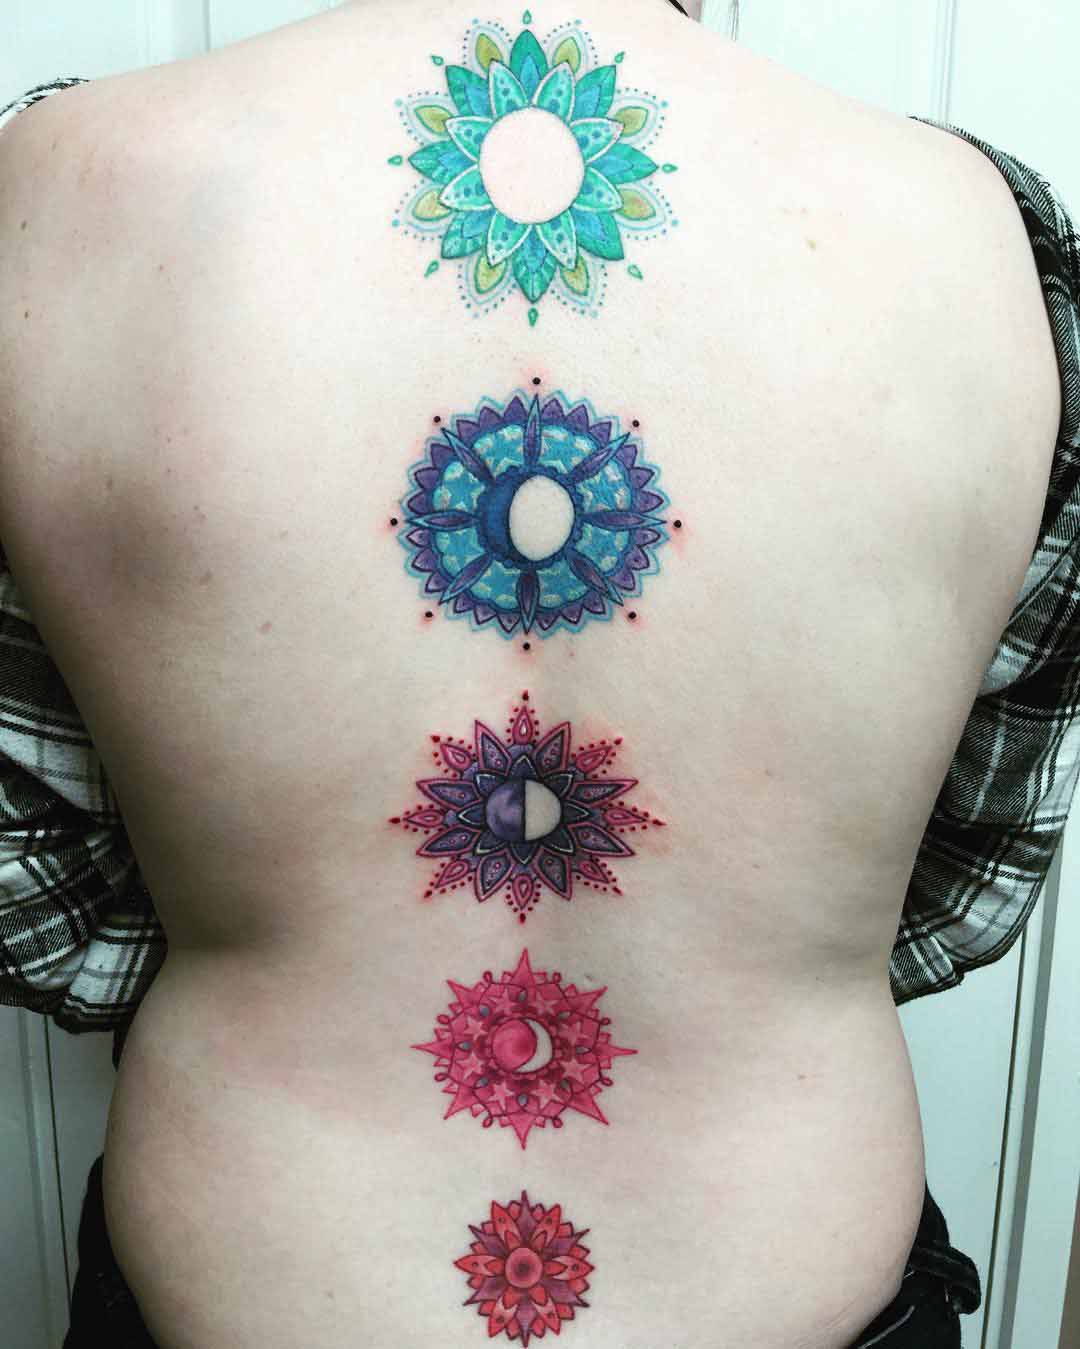 Flowers Moon Phases Tattoo on Spine by jaigilchristtattoo